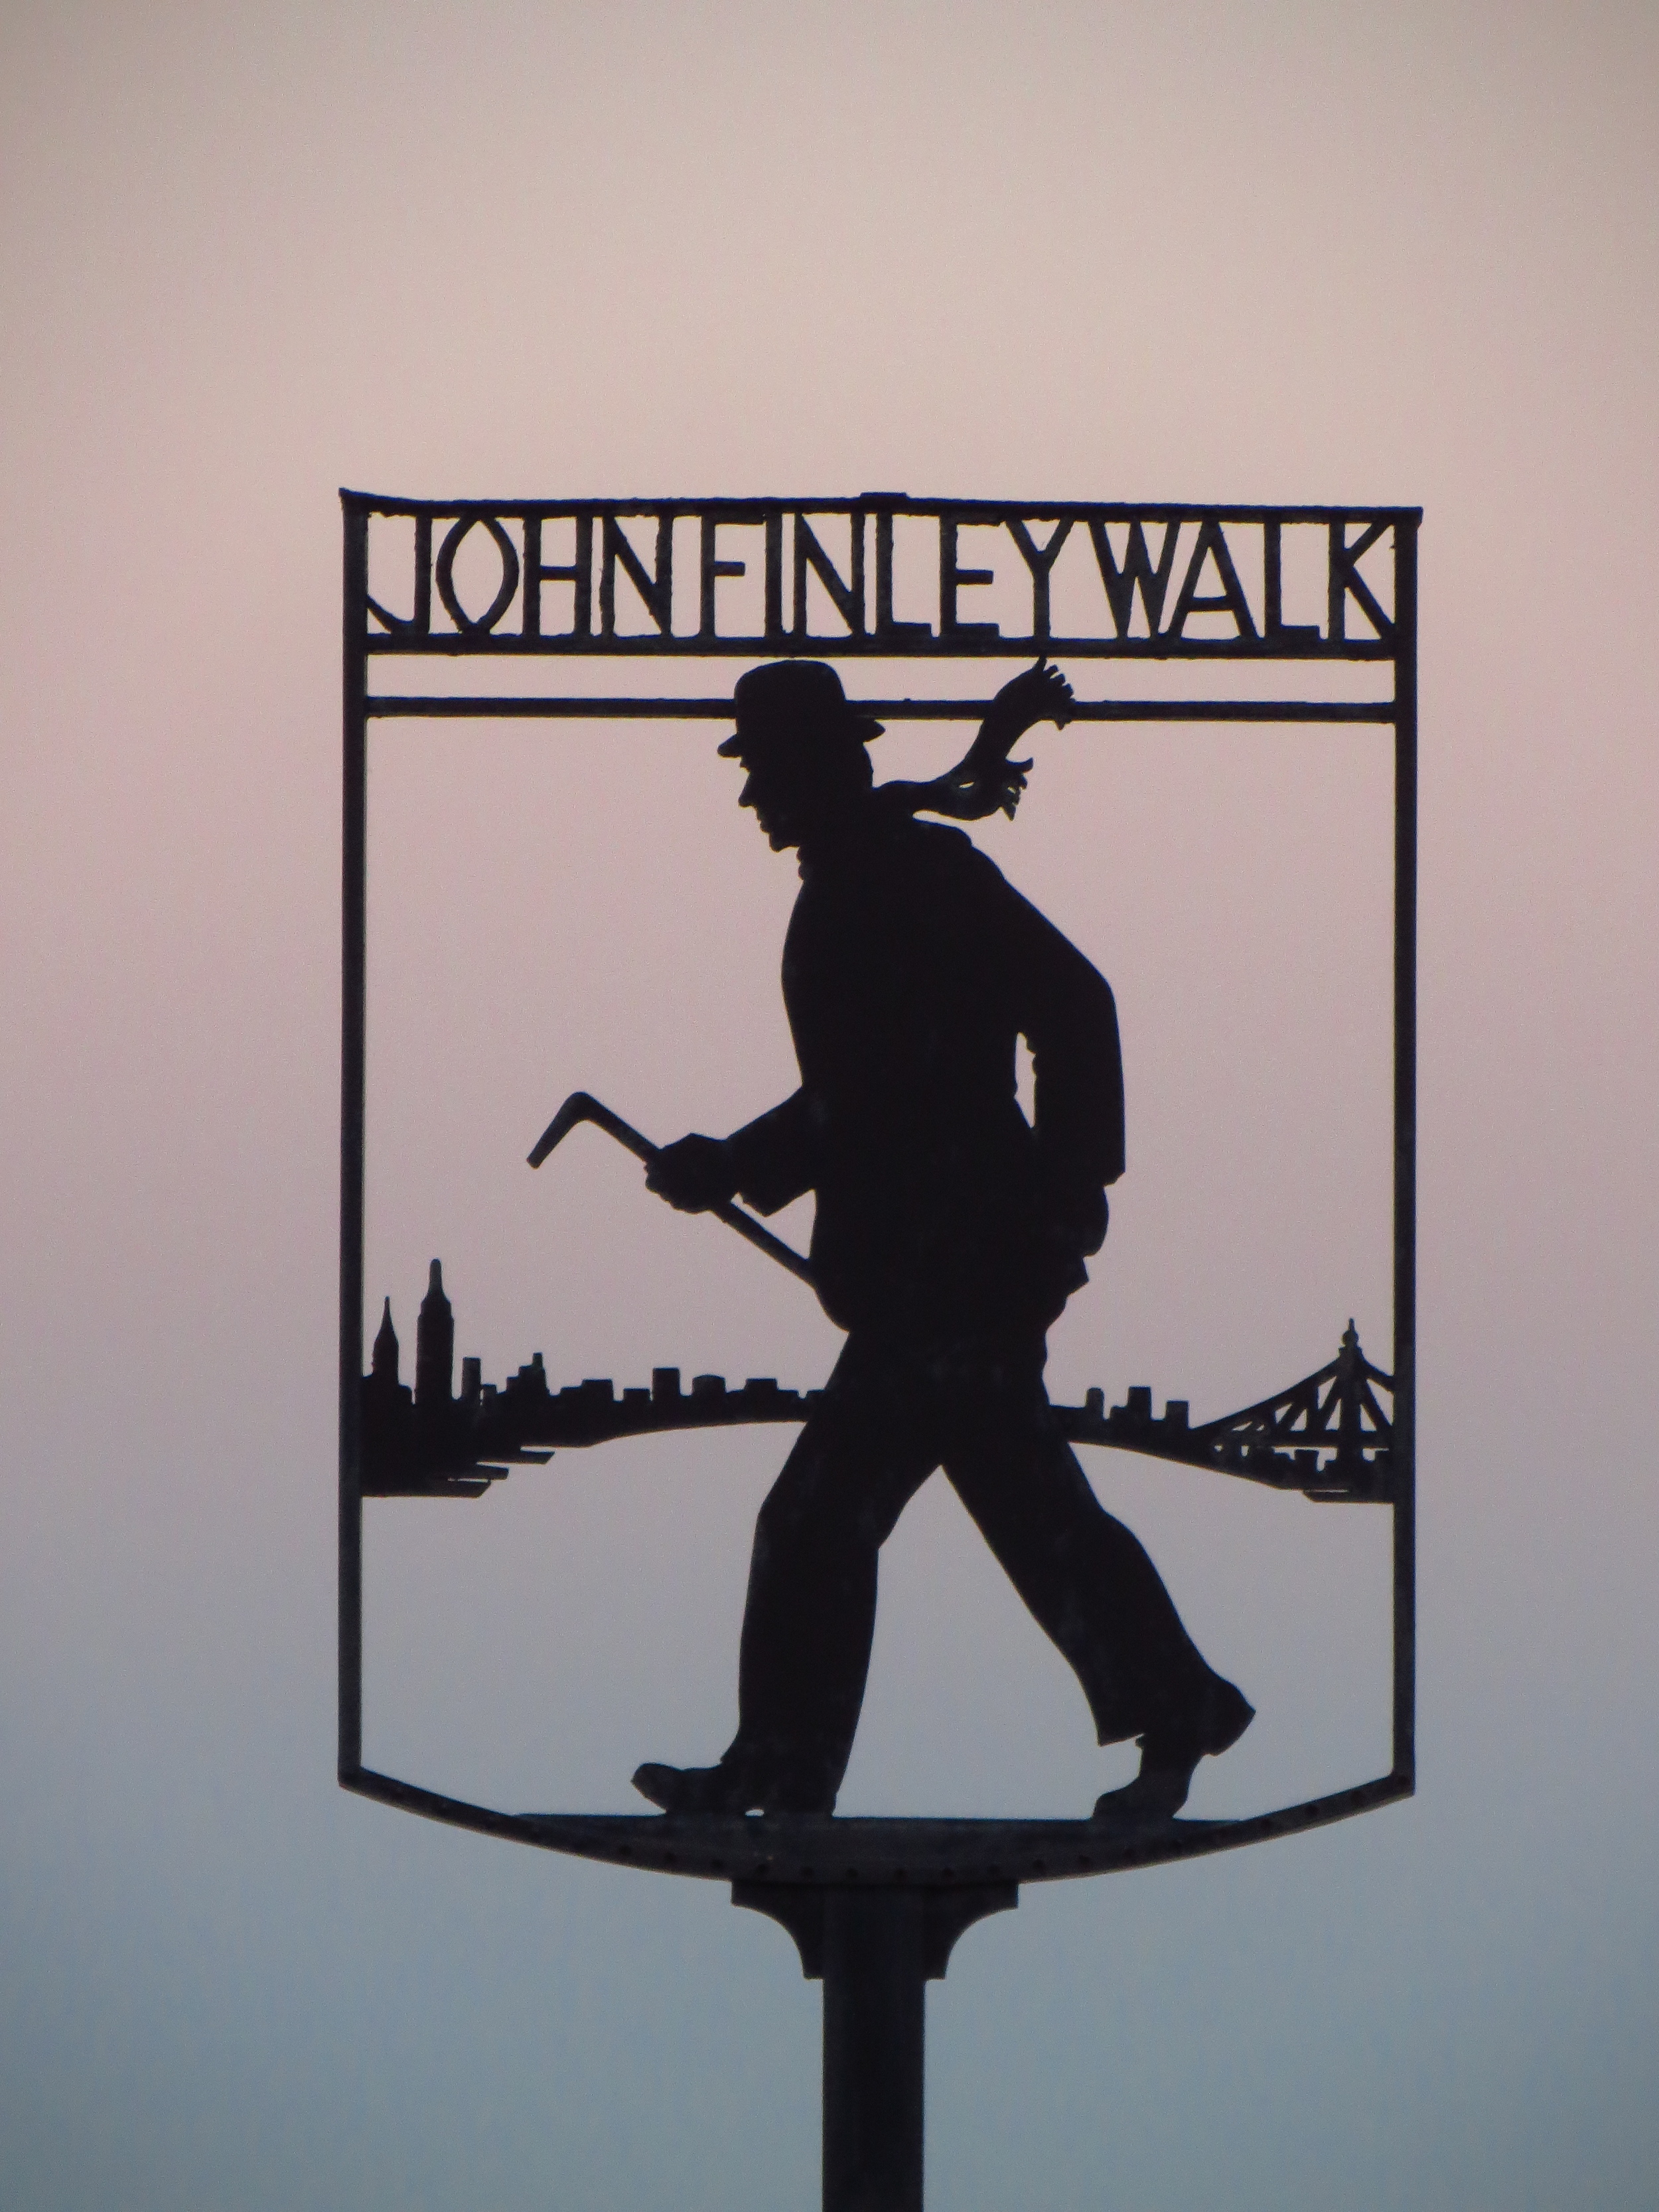 John Finley Walk in Carl Schurz Park